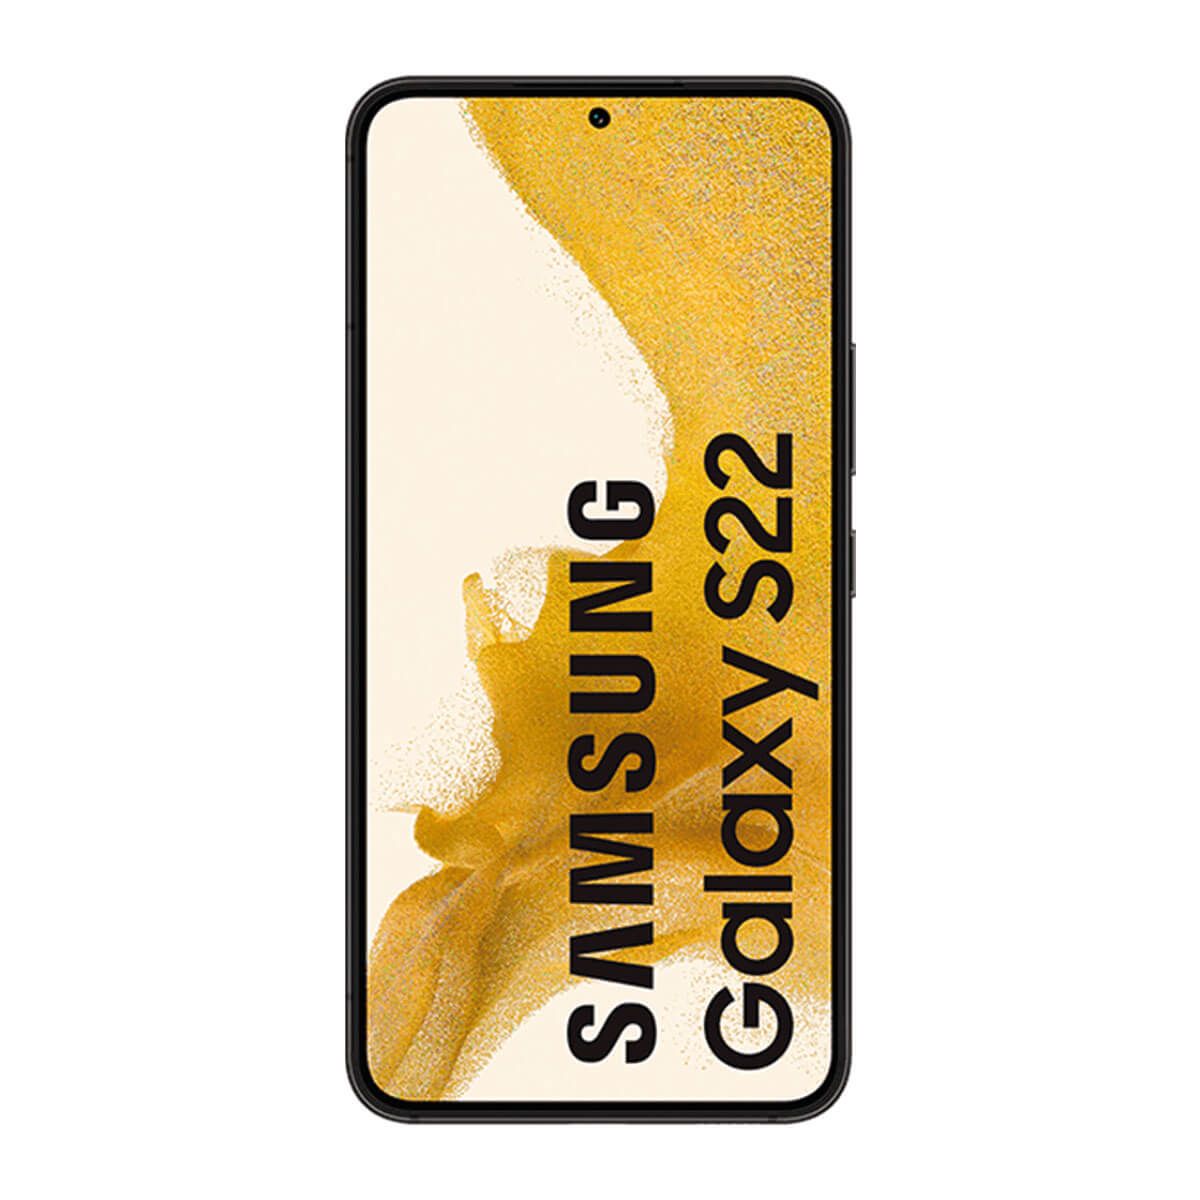  SAMSUNG Galaxy S22 SM-S901B/DS Dual SIM 8GB+256GB